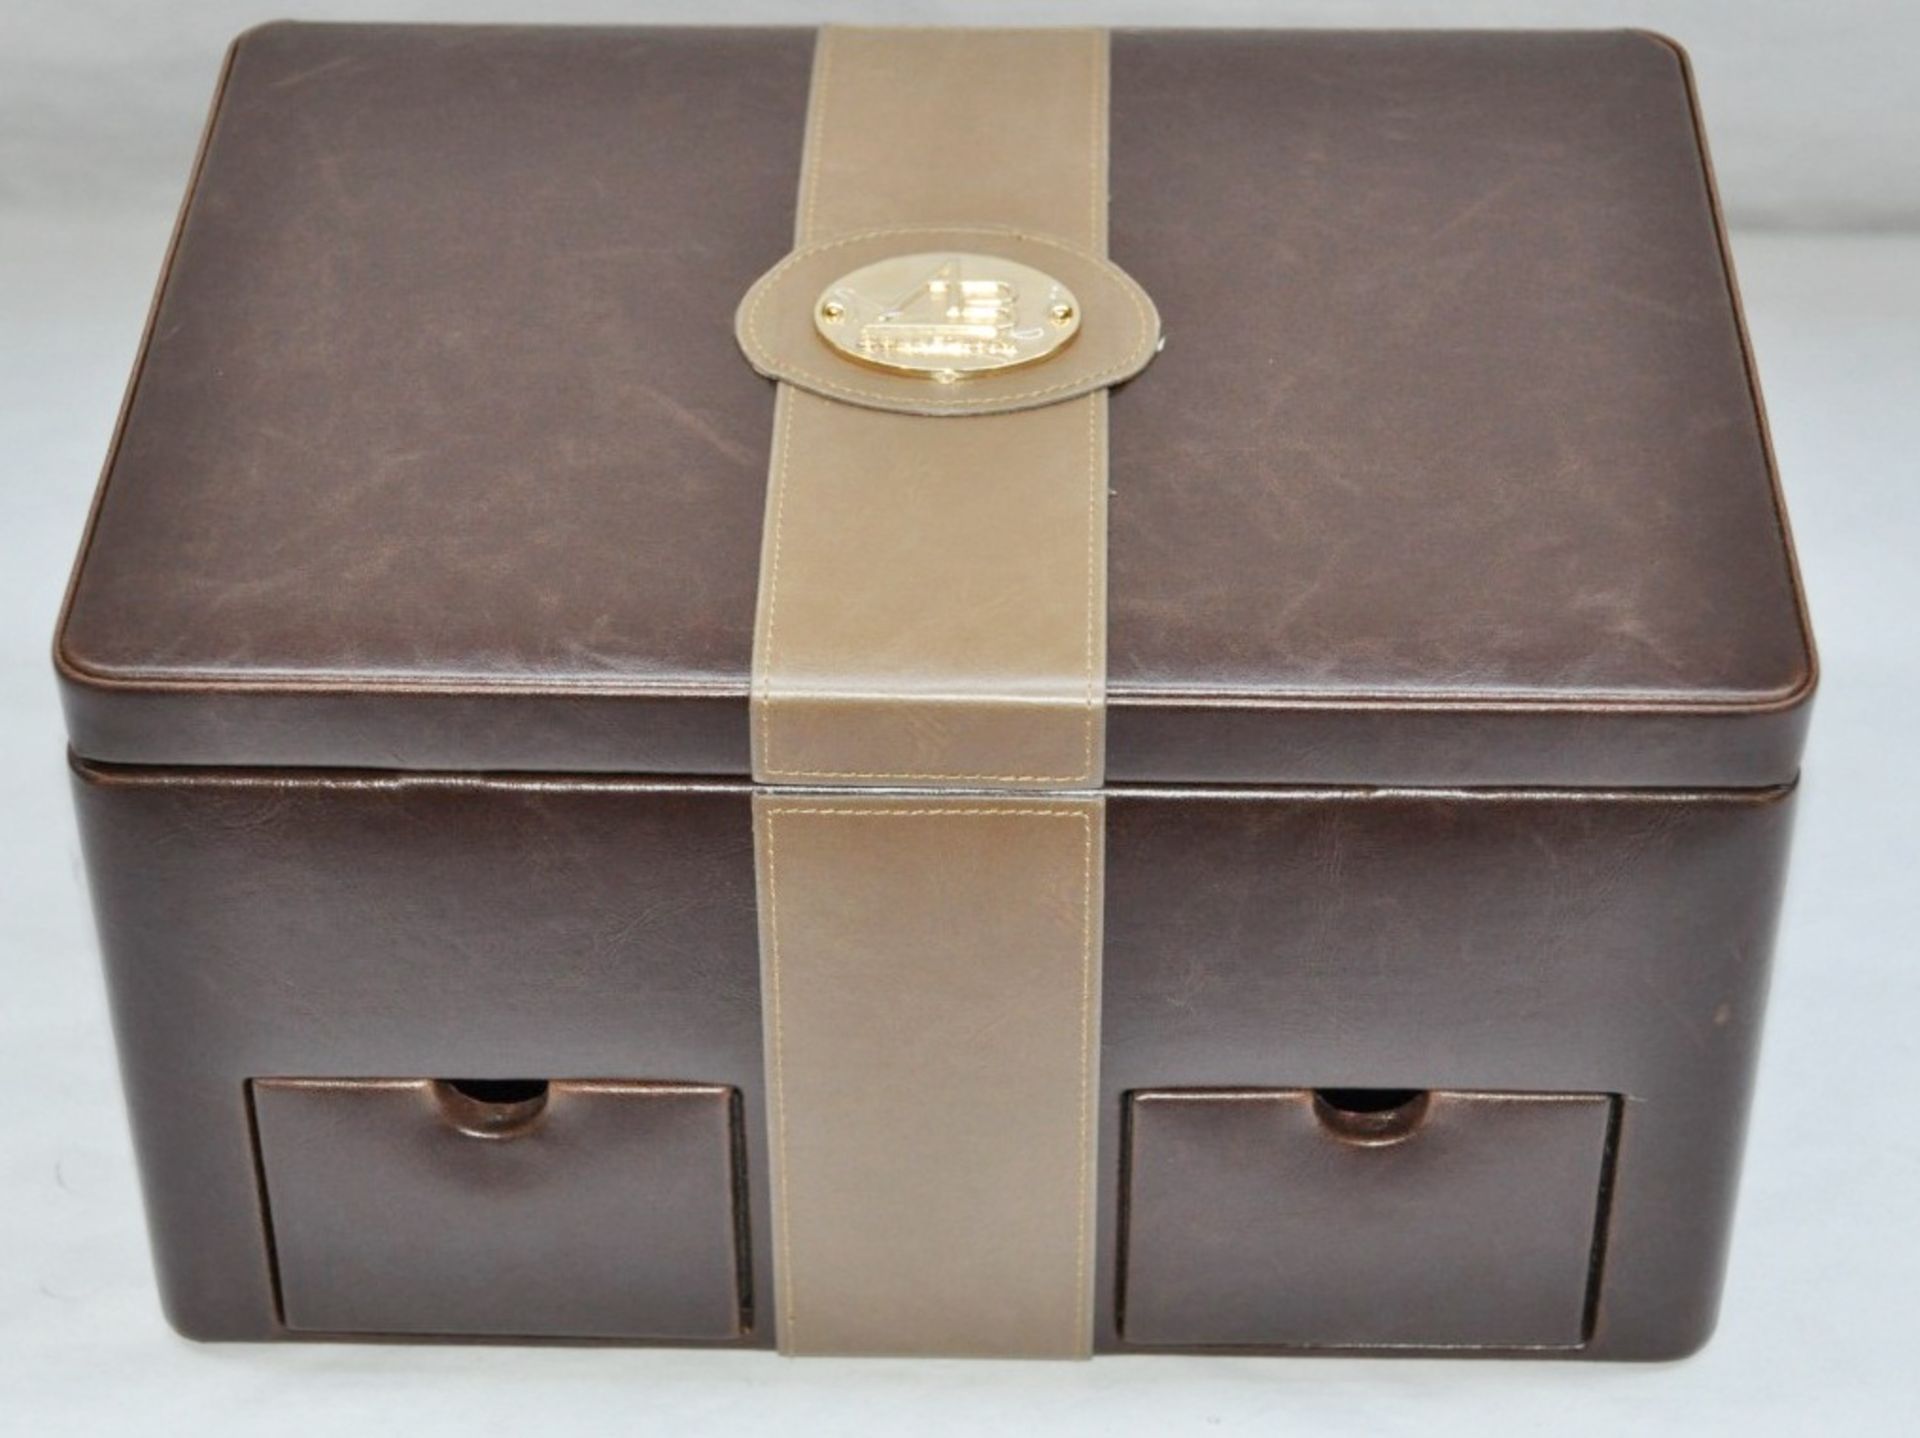 1 x "AB Collezioni" Italian Genuine Leather & Suede Luxury Jewellery Box (34044) - Ref LT000 - - Image 6 of 9